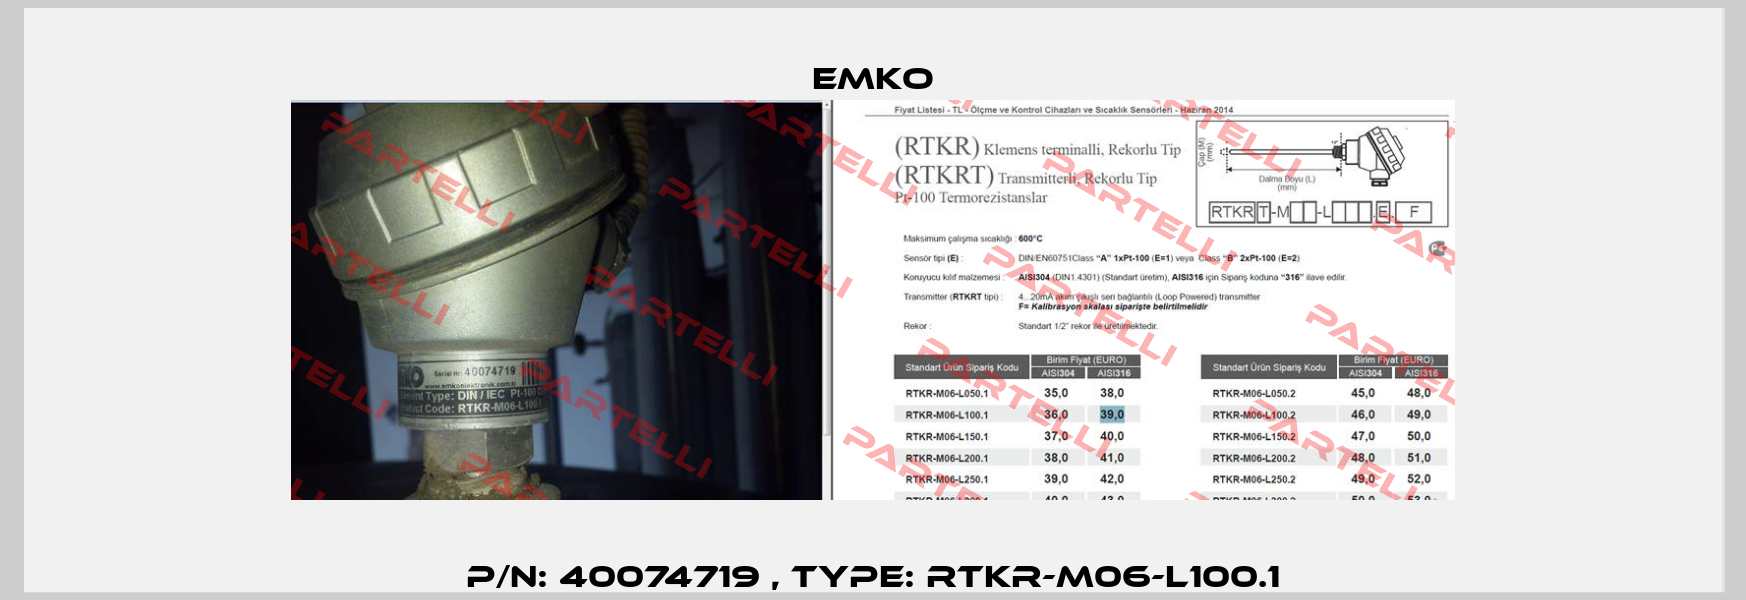 P/N: 40074719 , Type: RTKR-M06-L100.1 EMKO